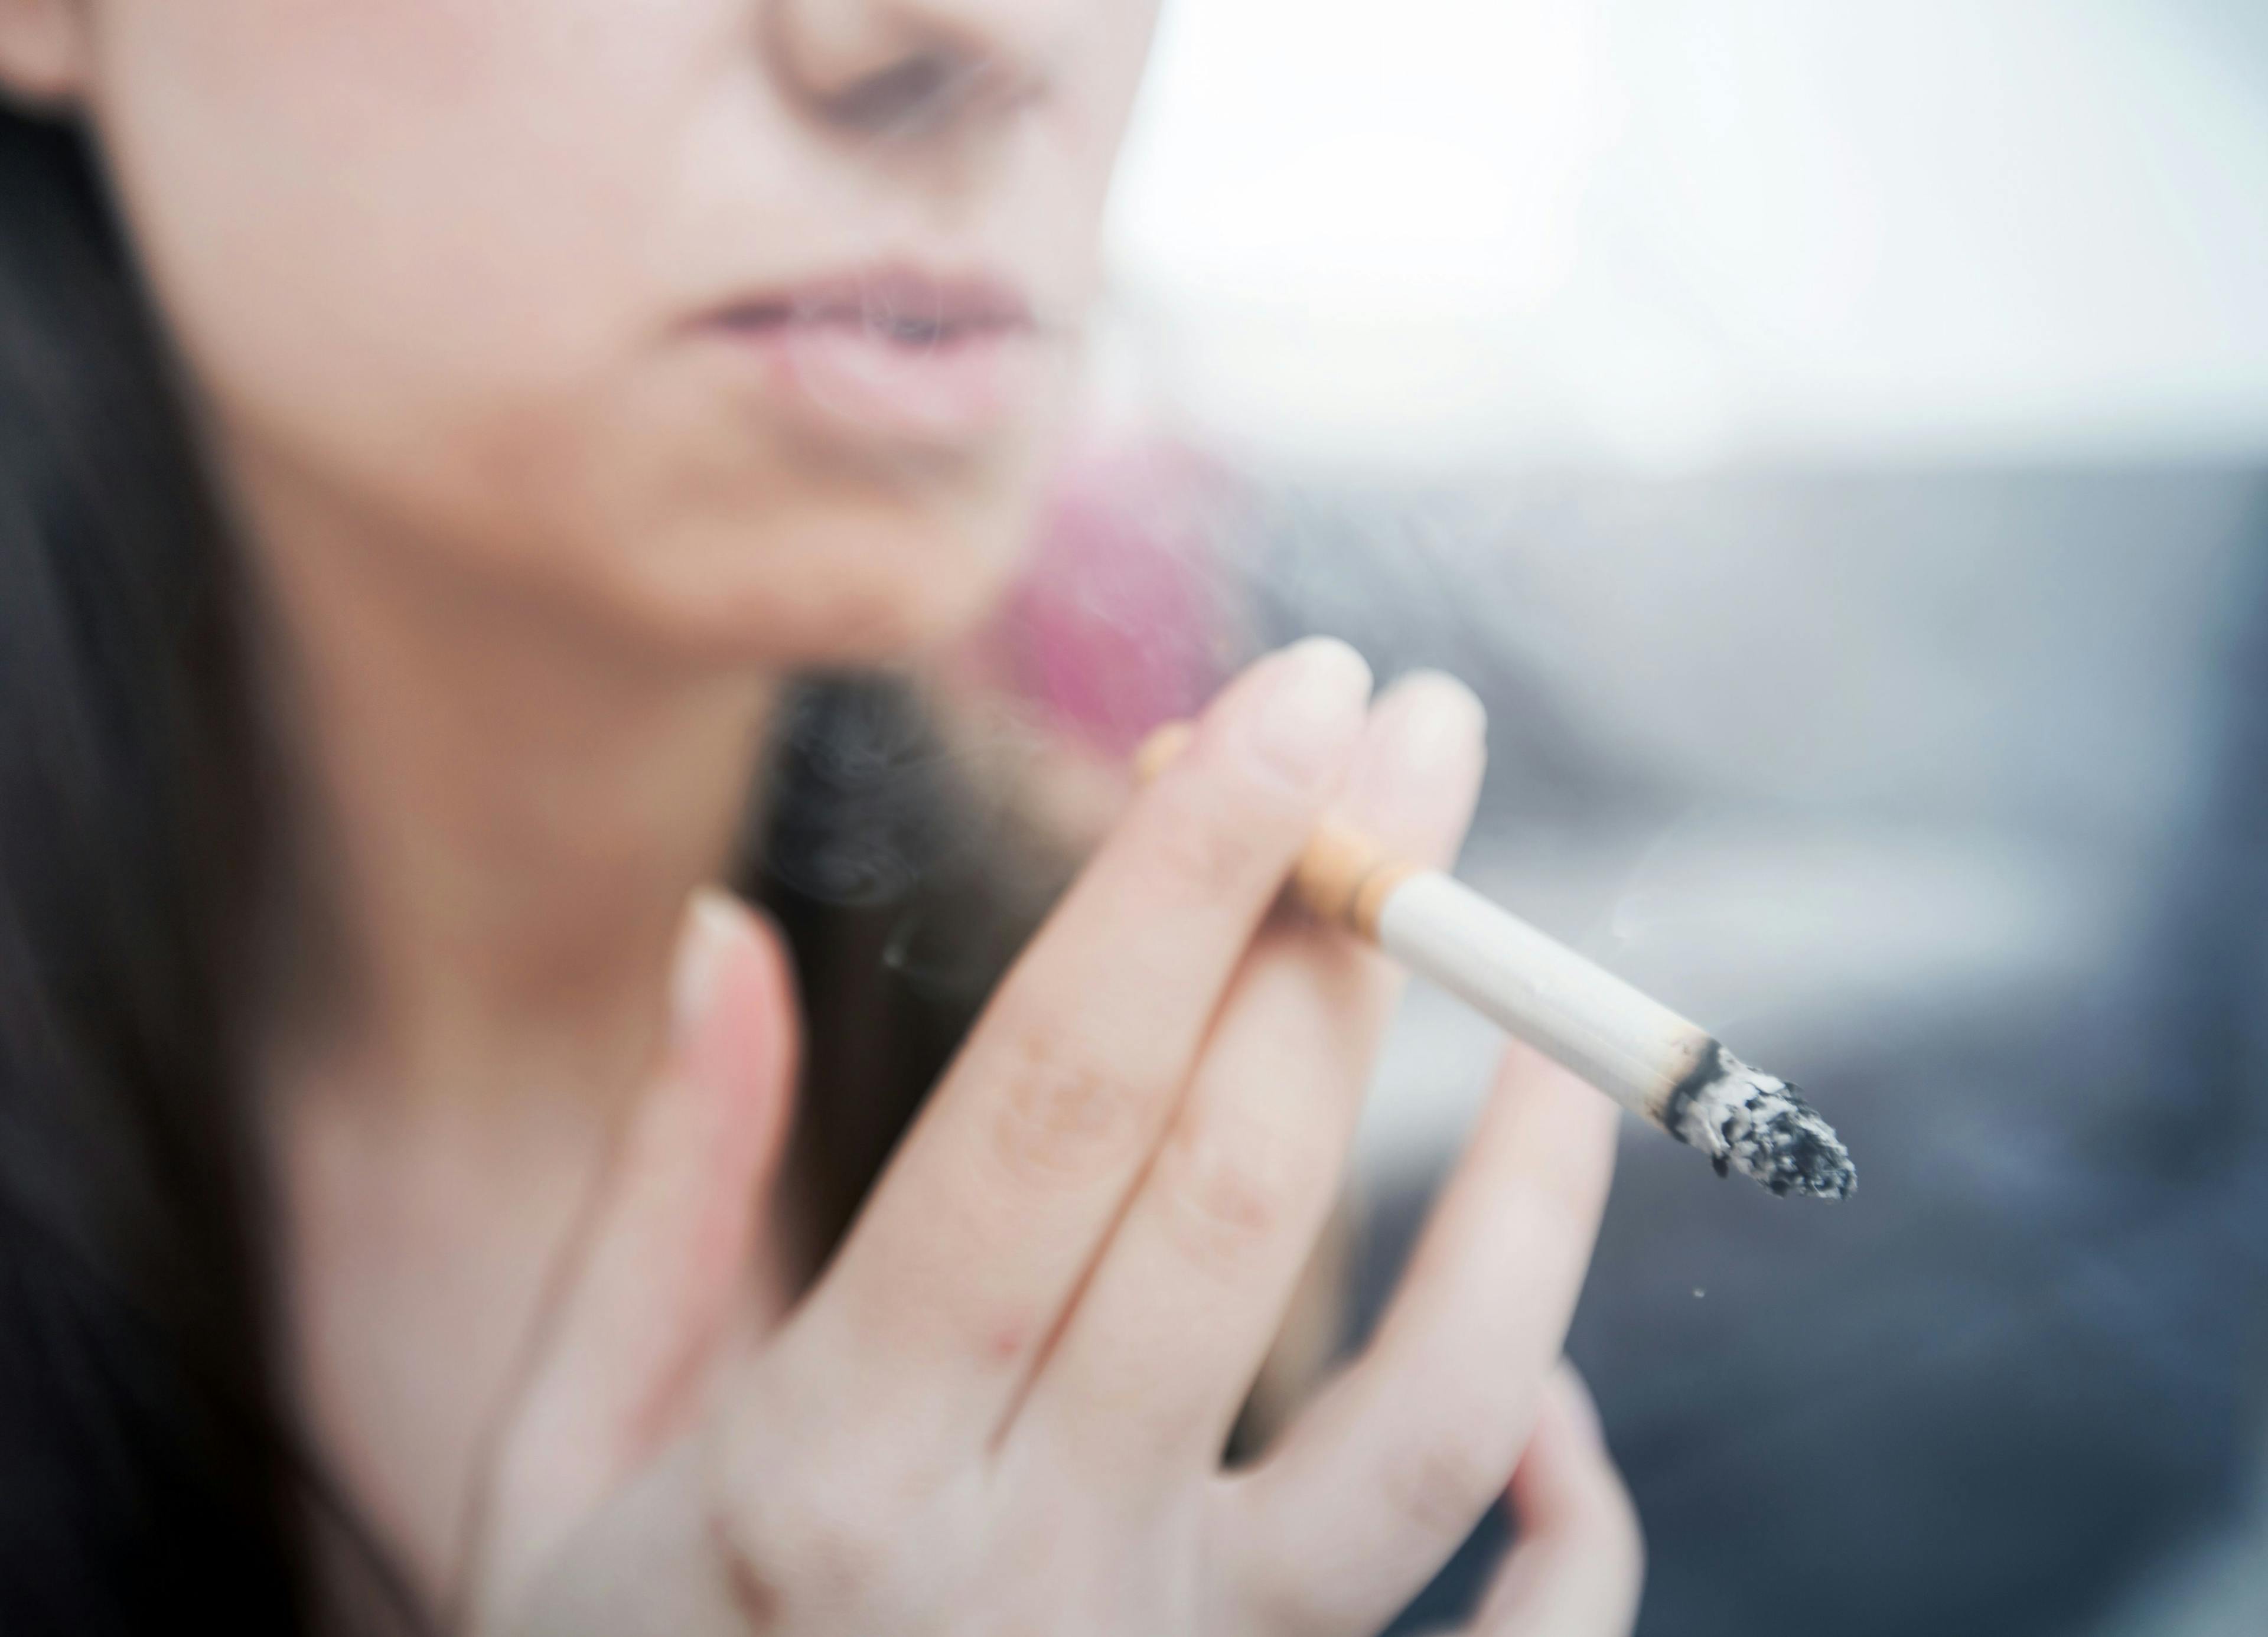 woman smoking a cigarette | Image Credit: mitarart - stock.adobe.com